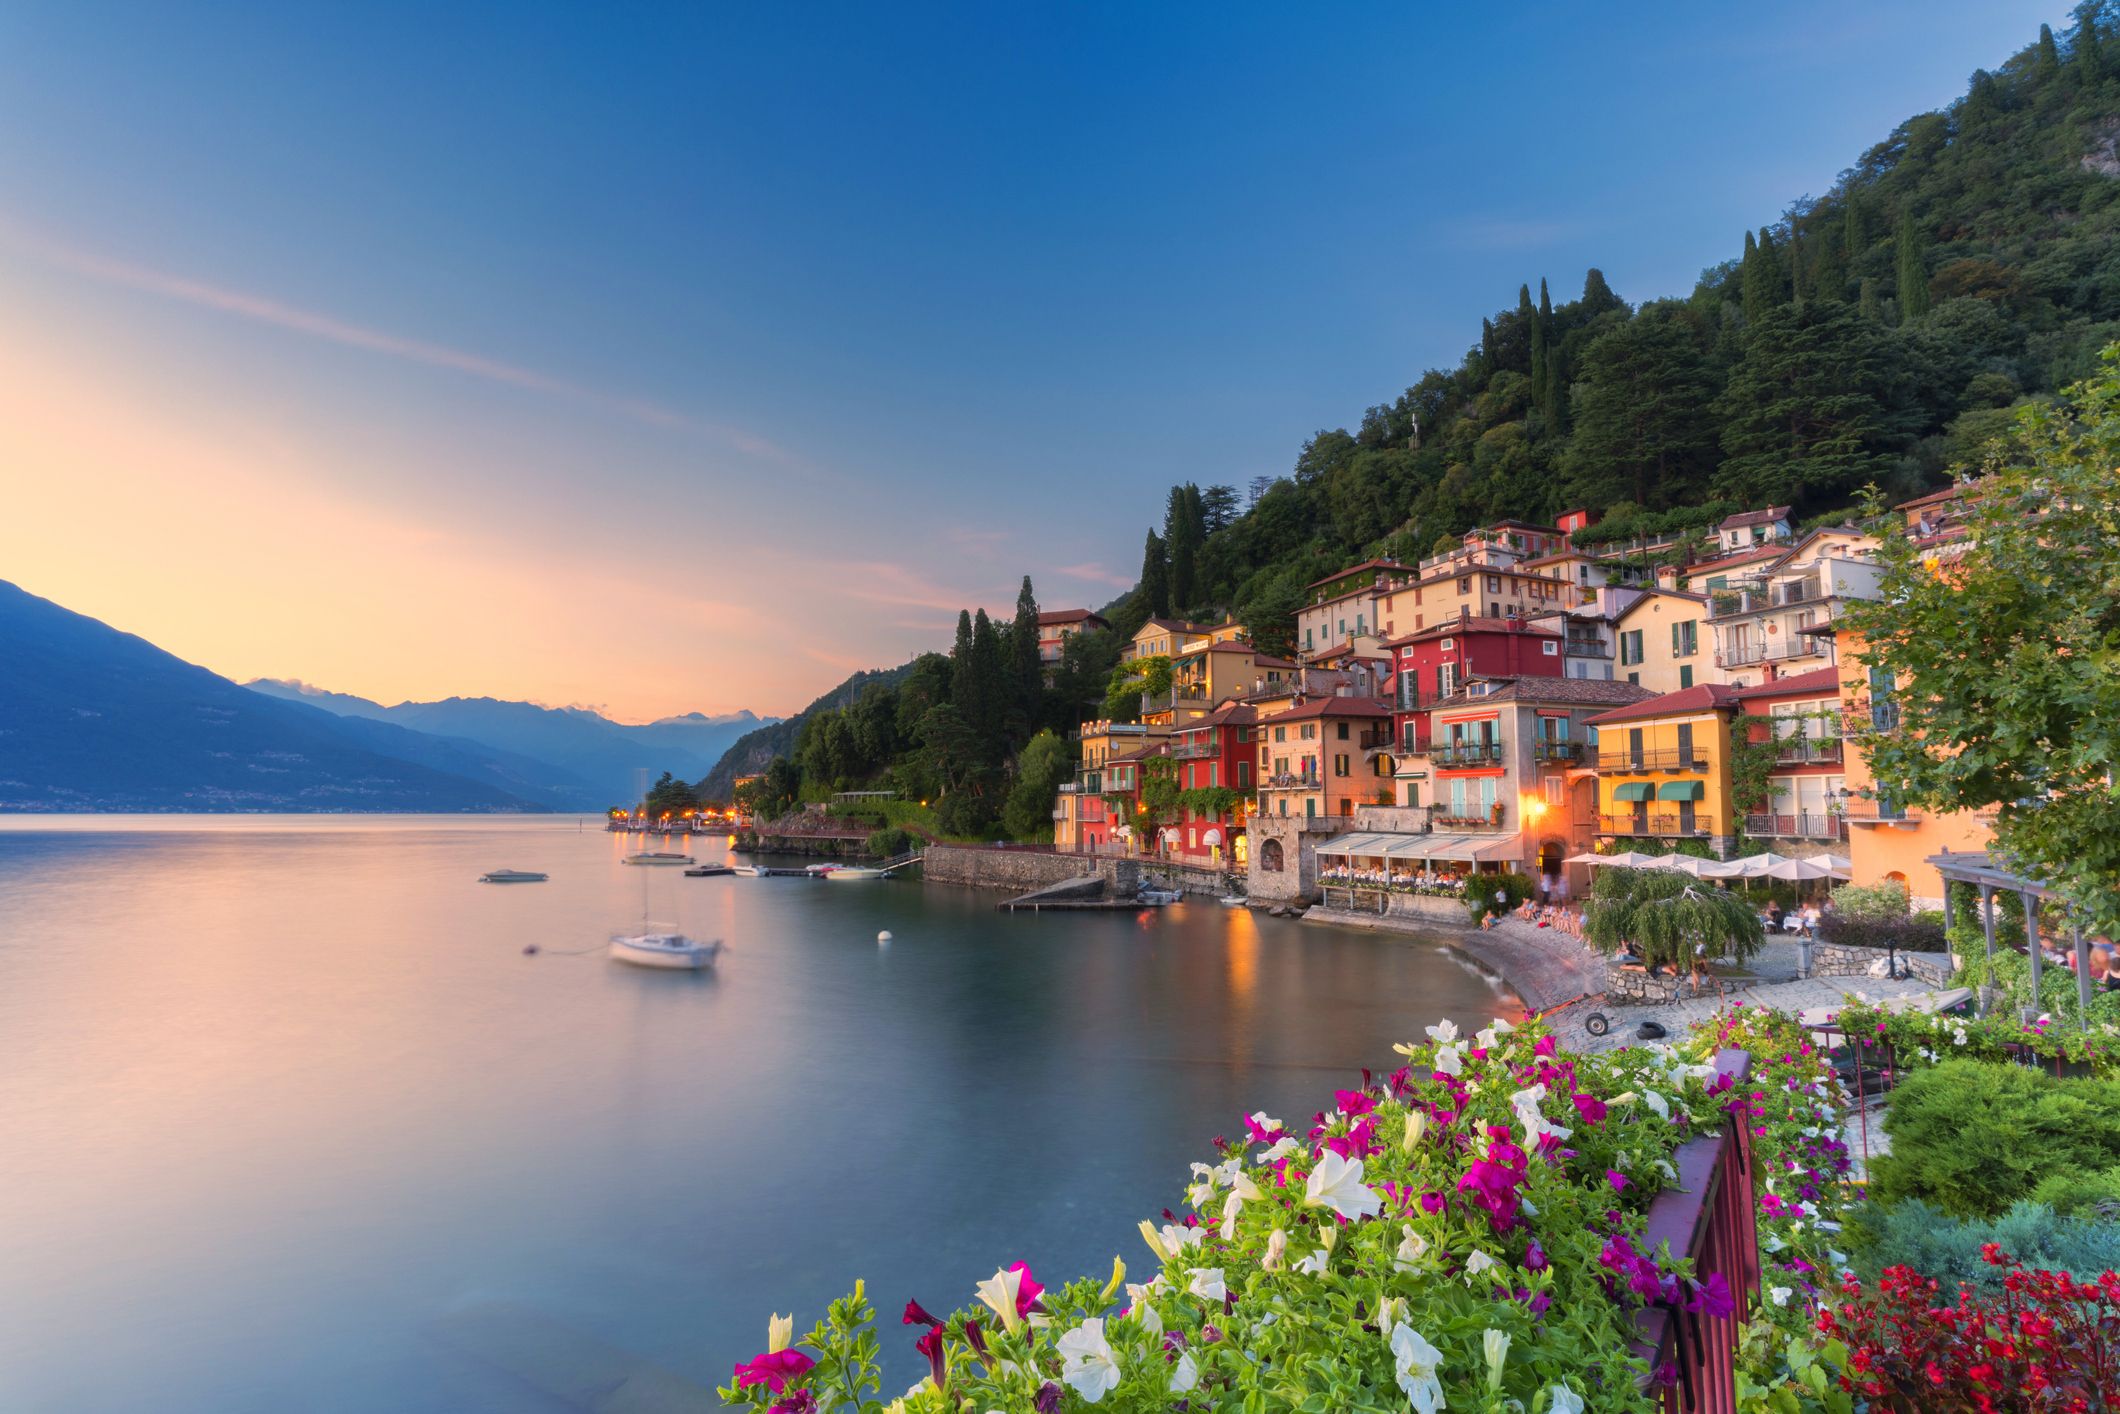 Beautiful photos of the Italian Lakes